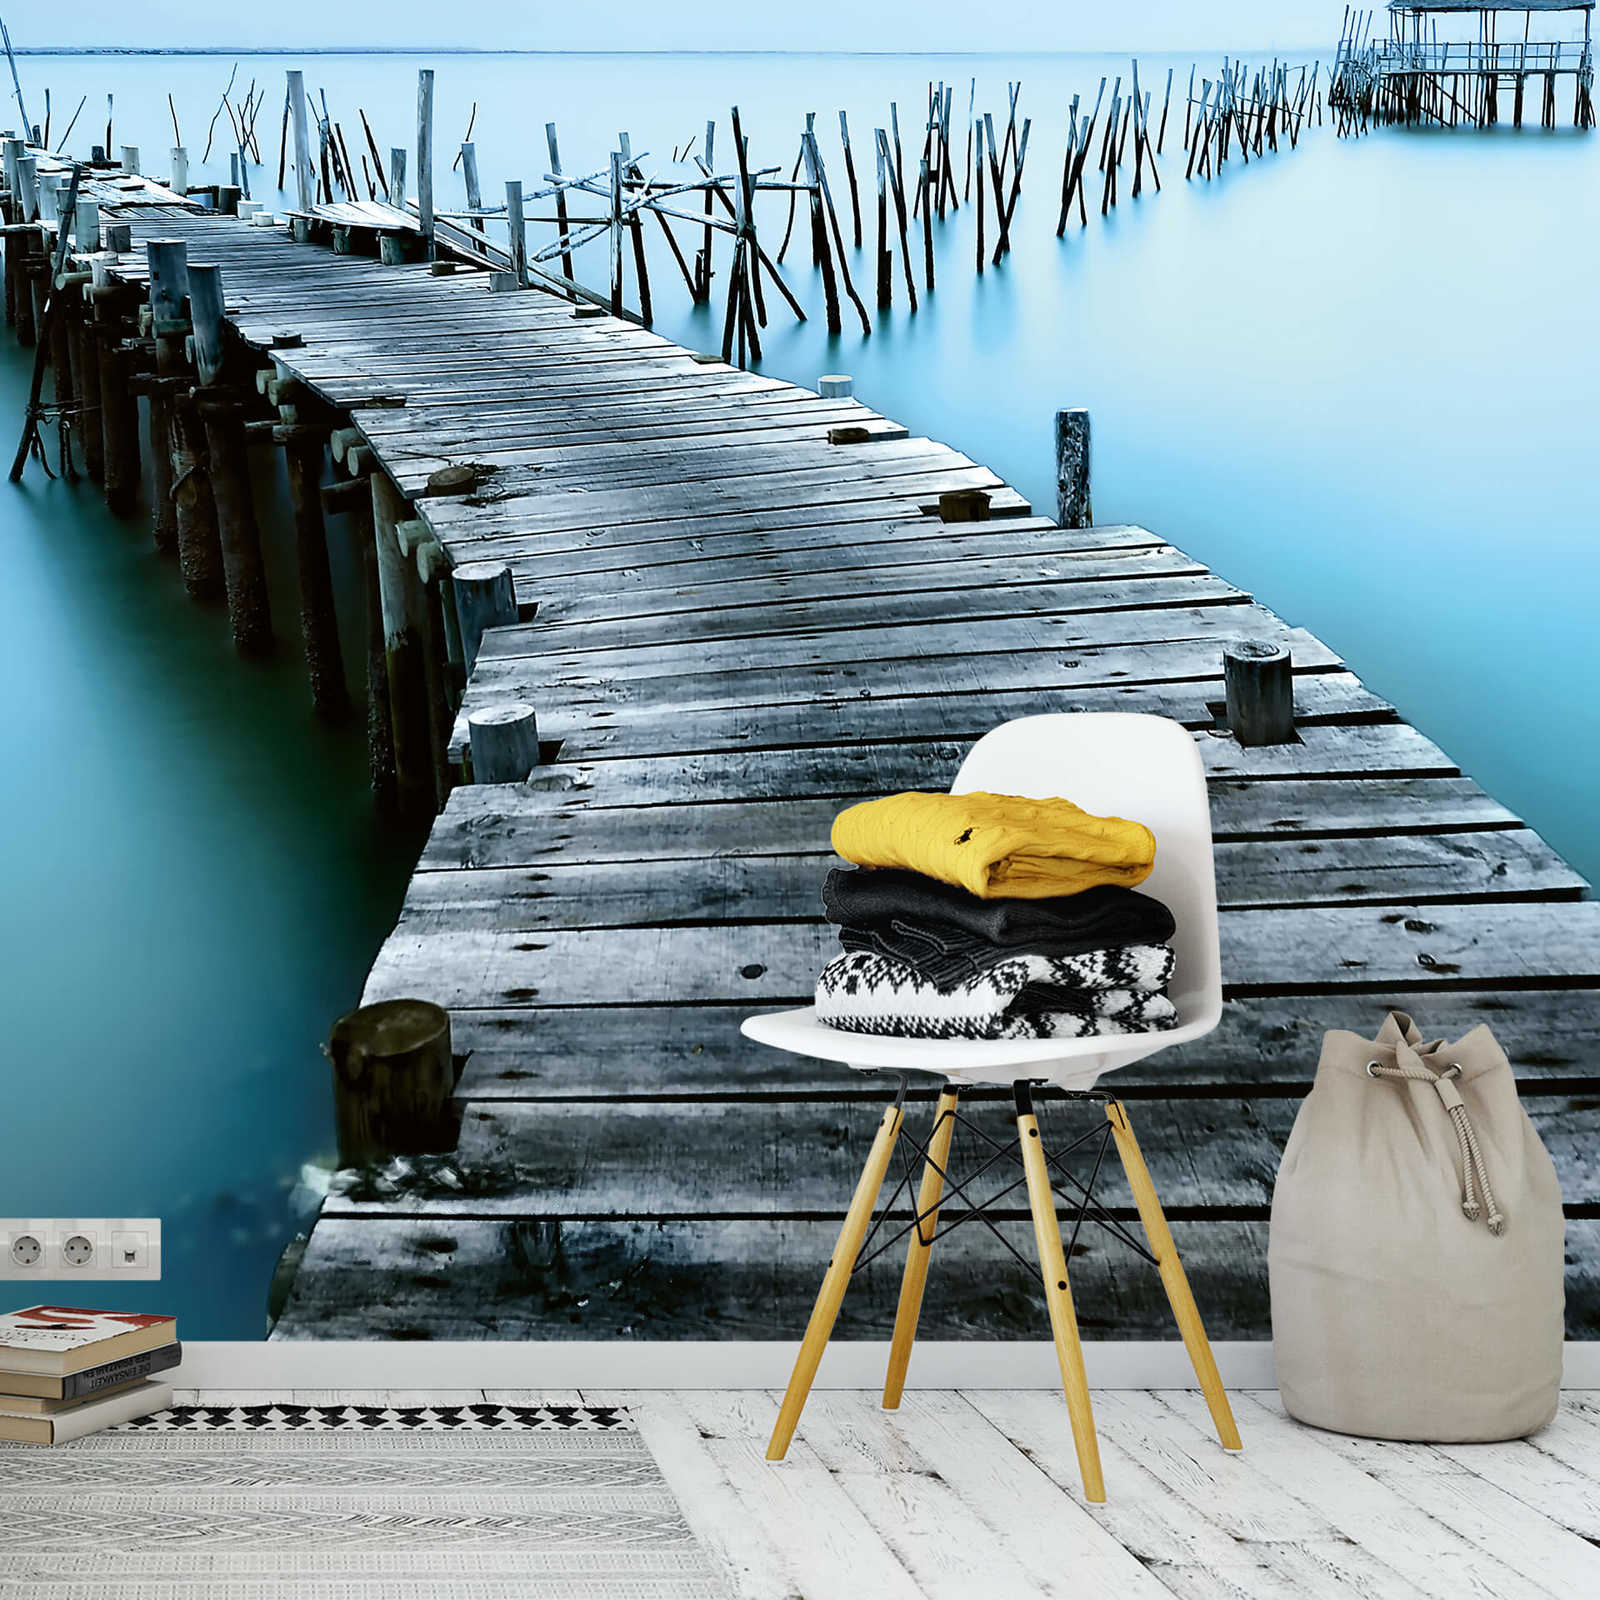             Fototapete alter Bootssteg im Wasser – Blau, Grau
        